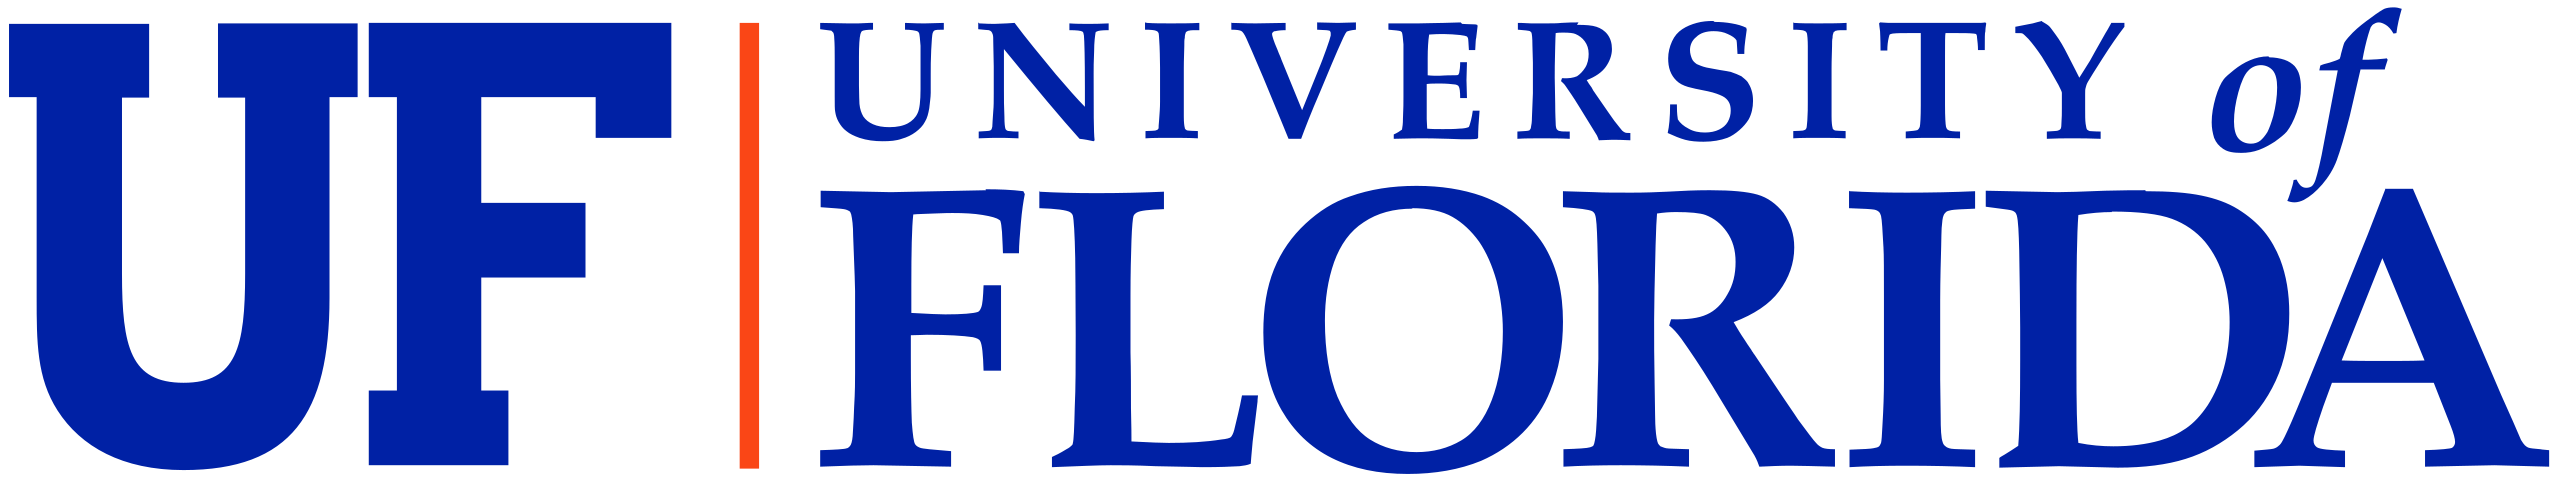 2560px-University_of_Florida_logo.svg